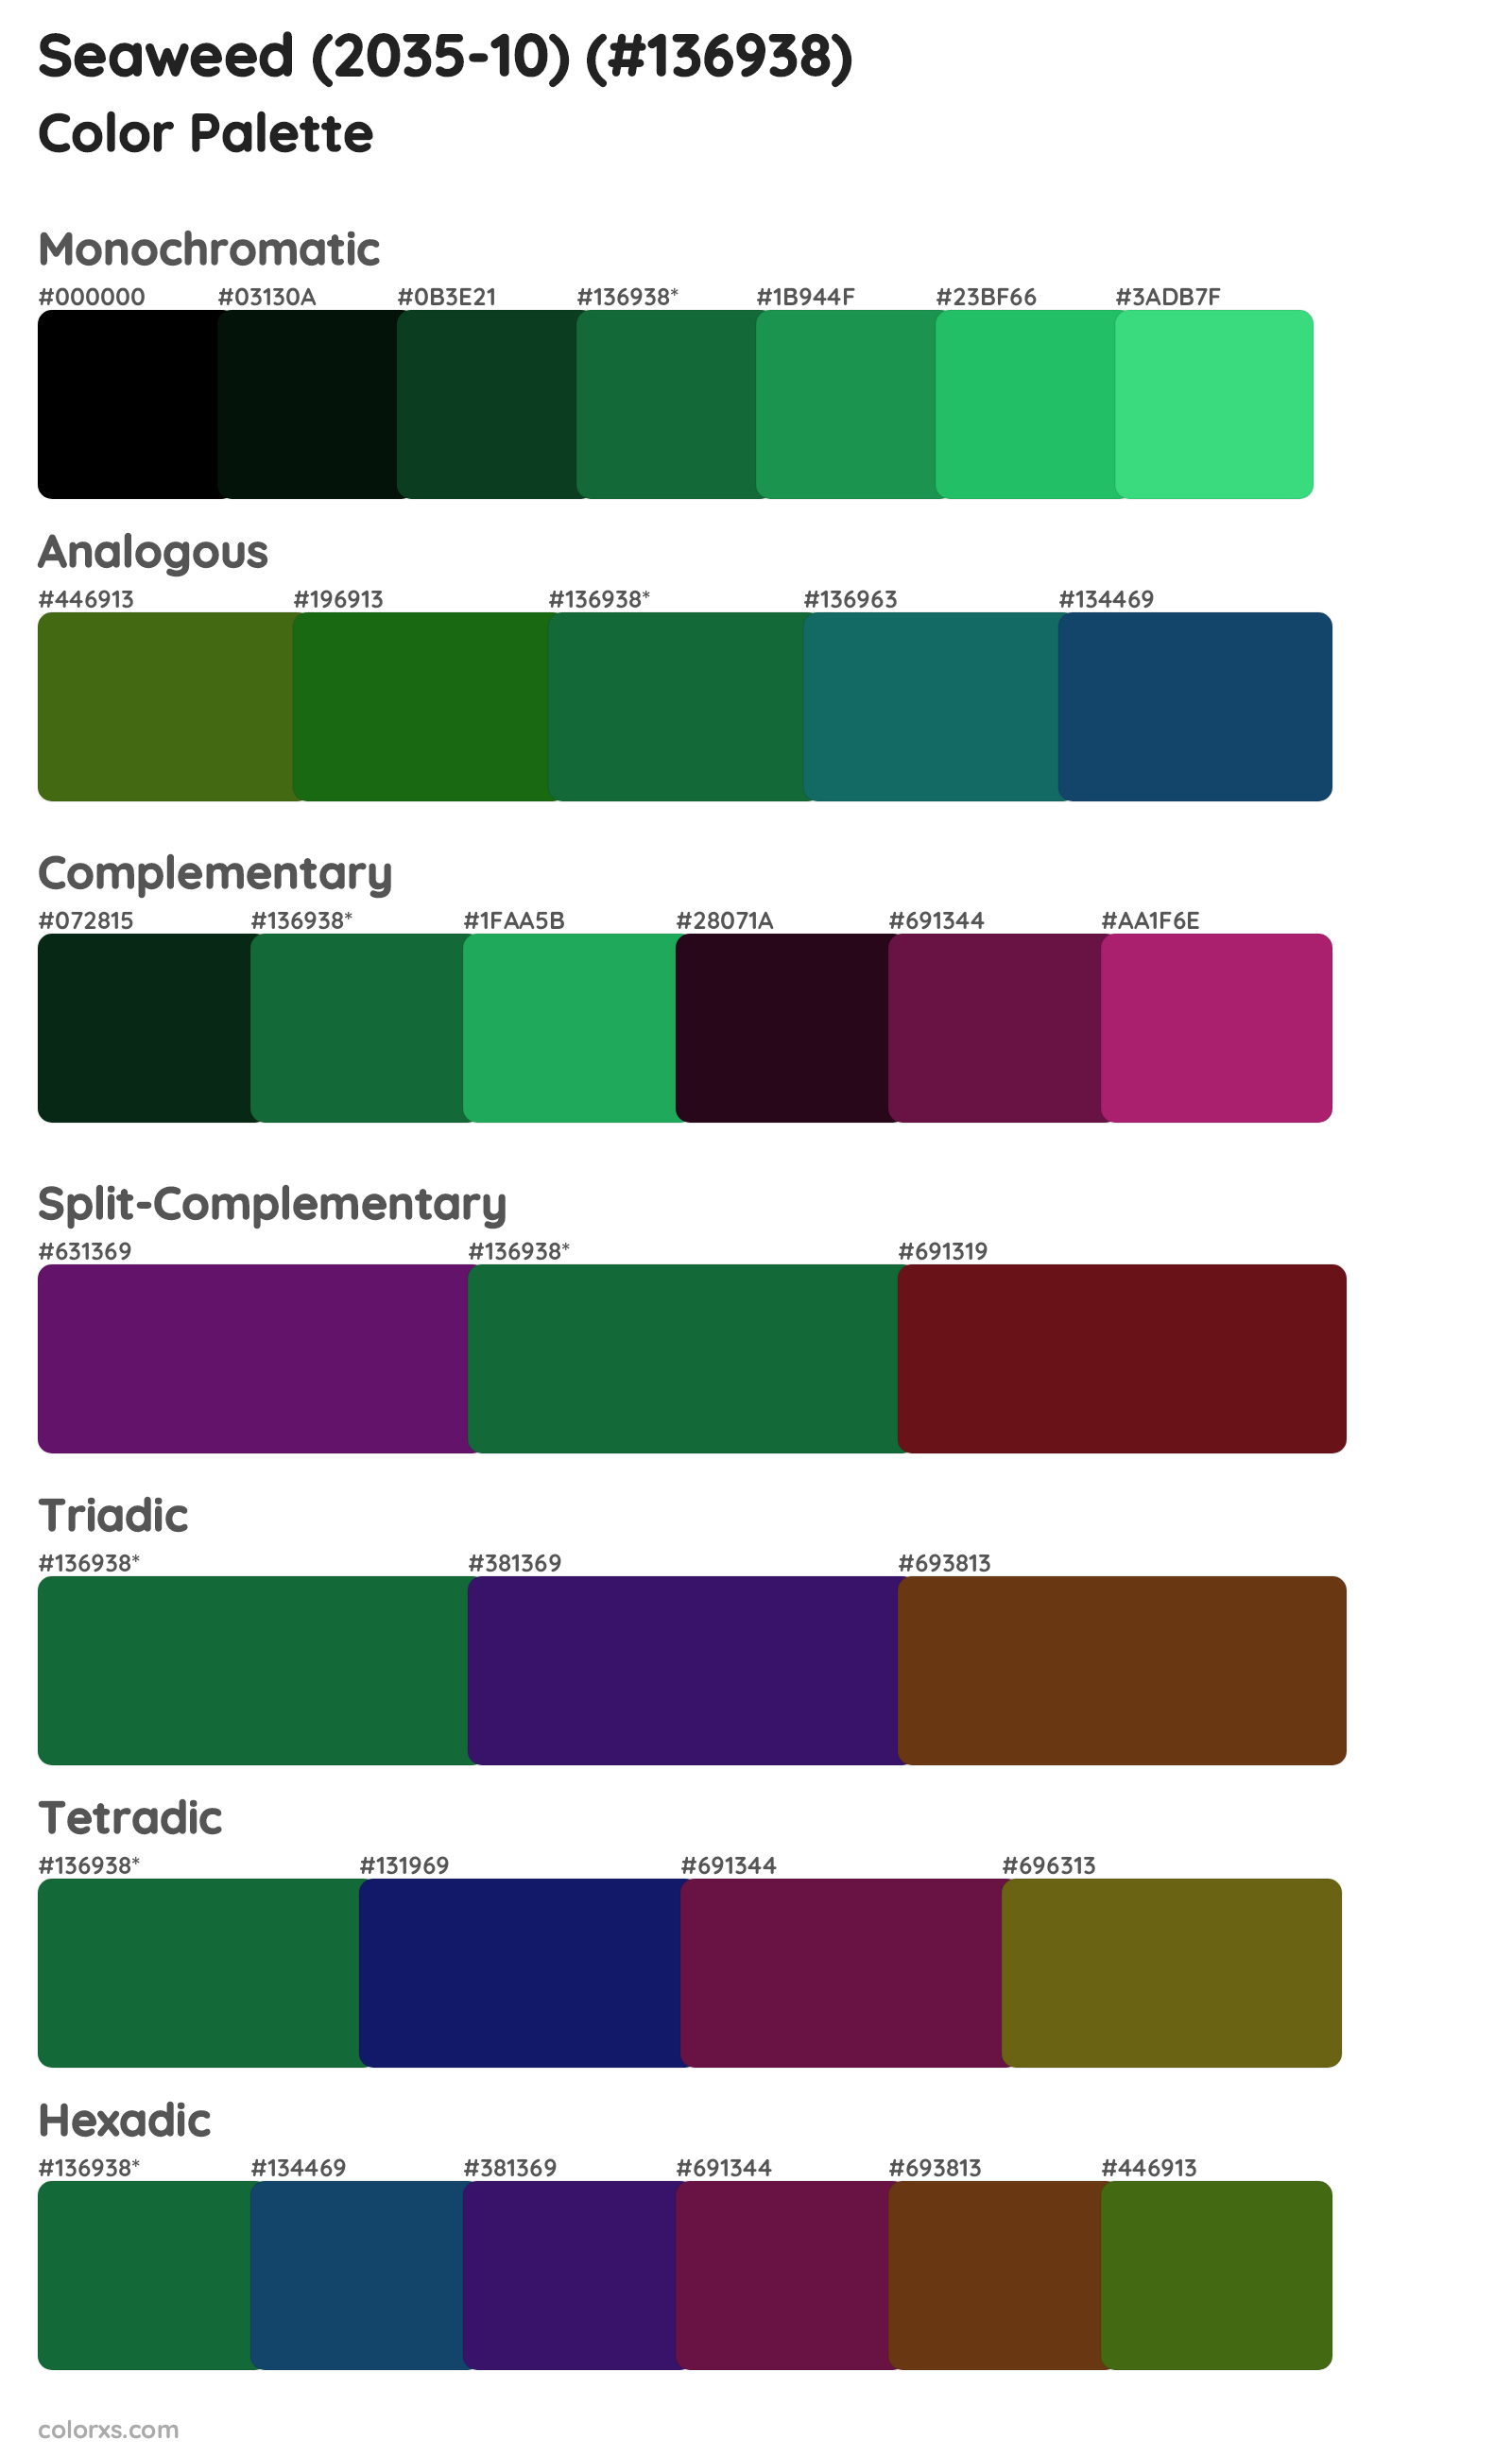 Seaweed (2035-10) Color Scheme Palettes